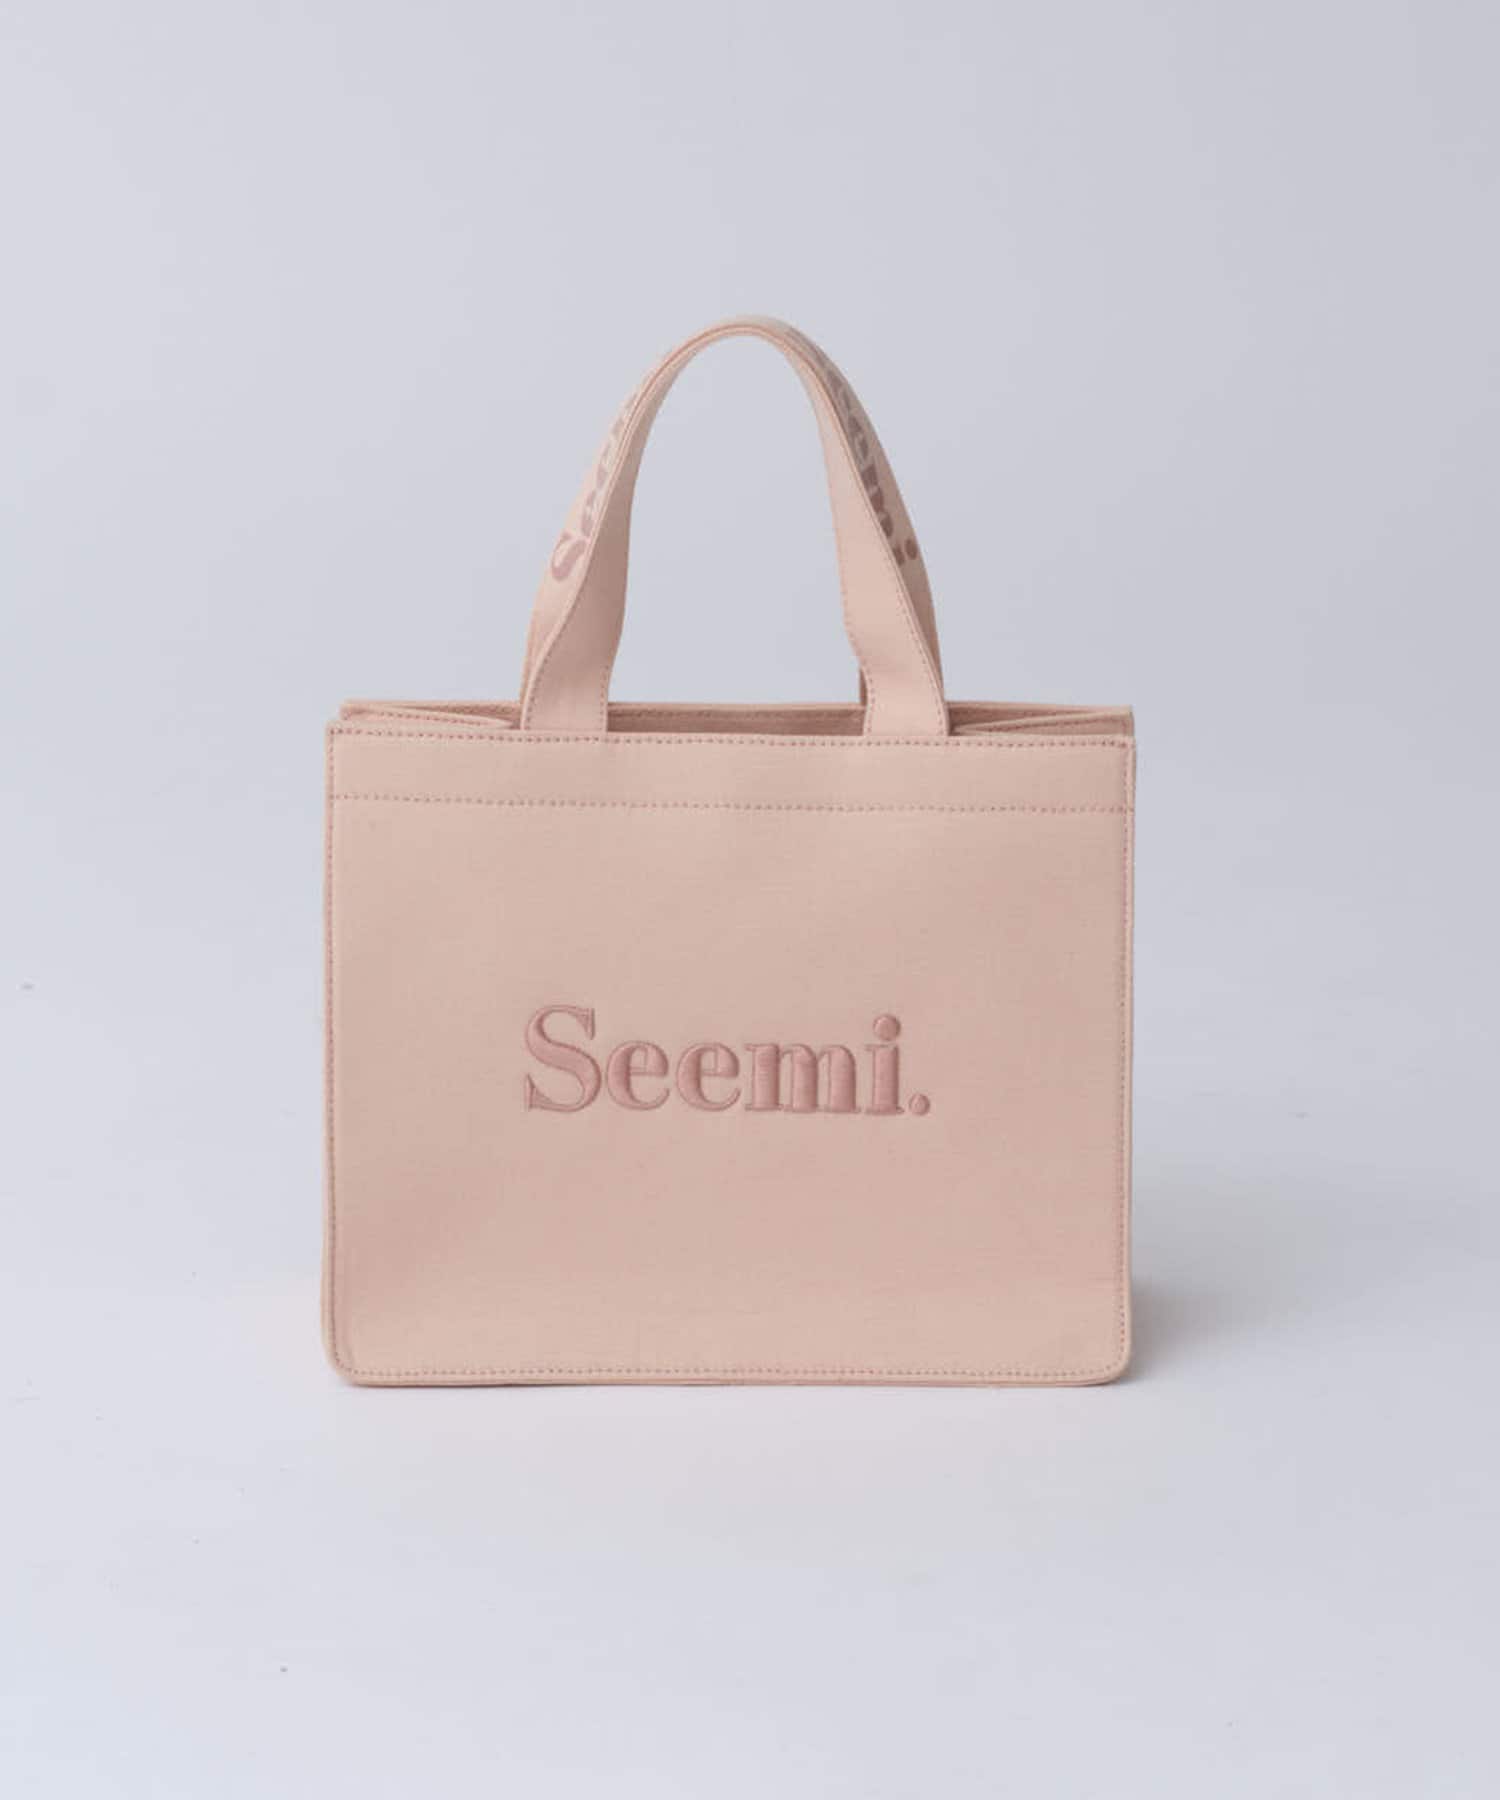 Seemi.by NICE CLAUP(シーミーバイナイスクラップ) Seemi刺繍ミニトートバッグ